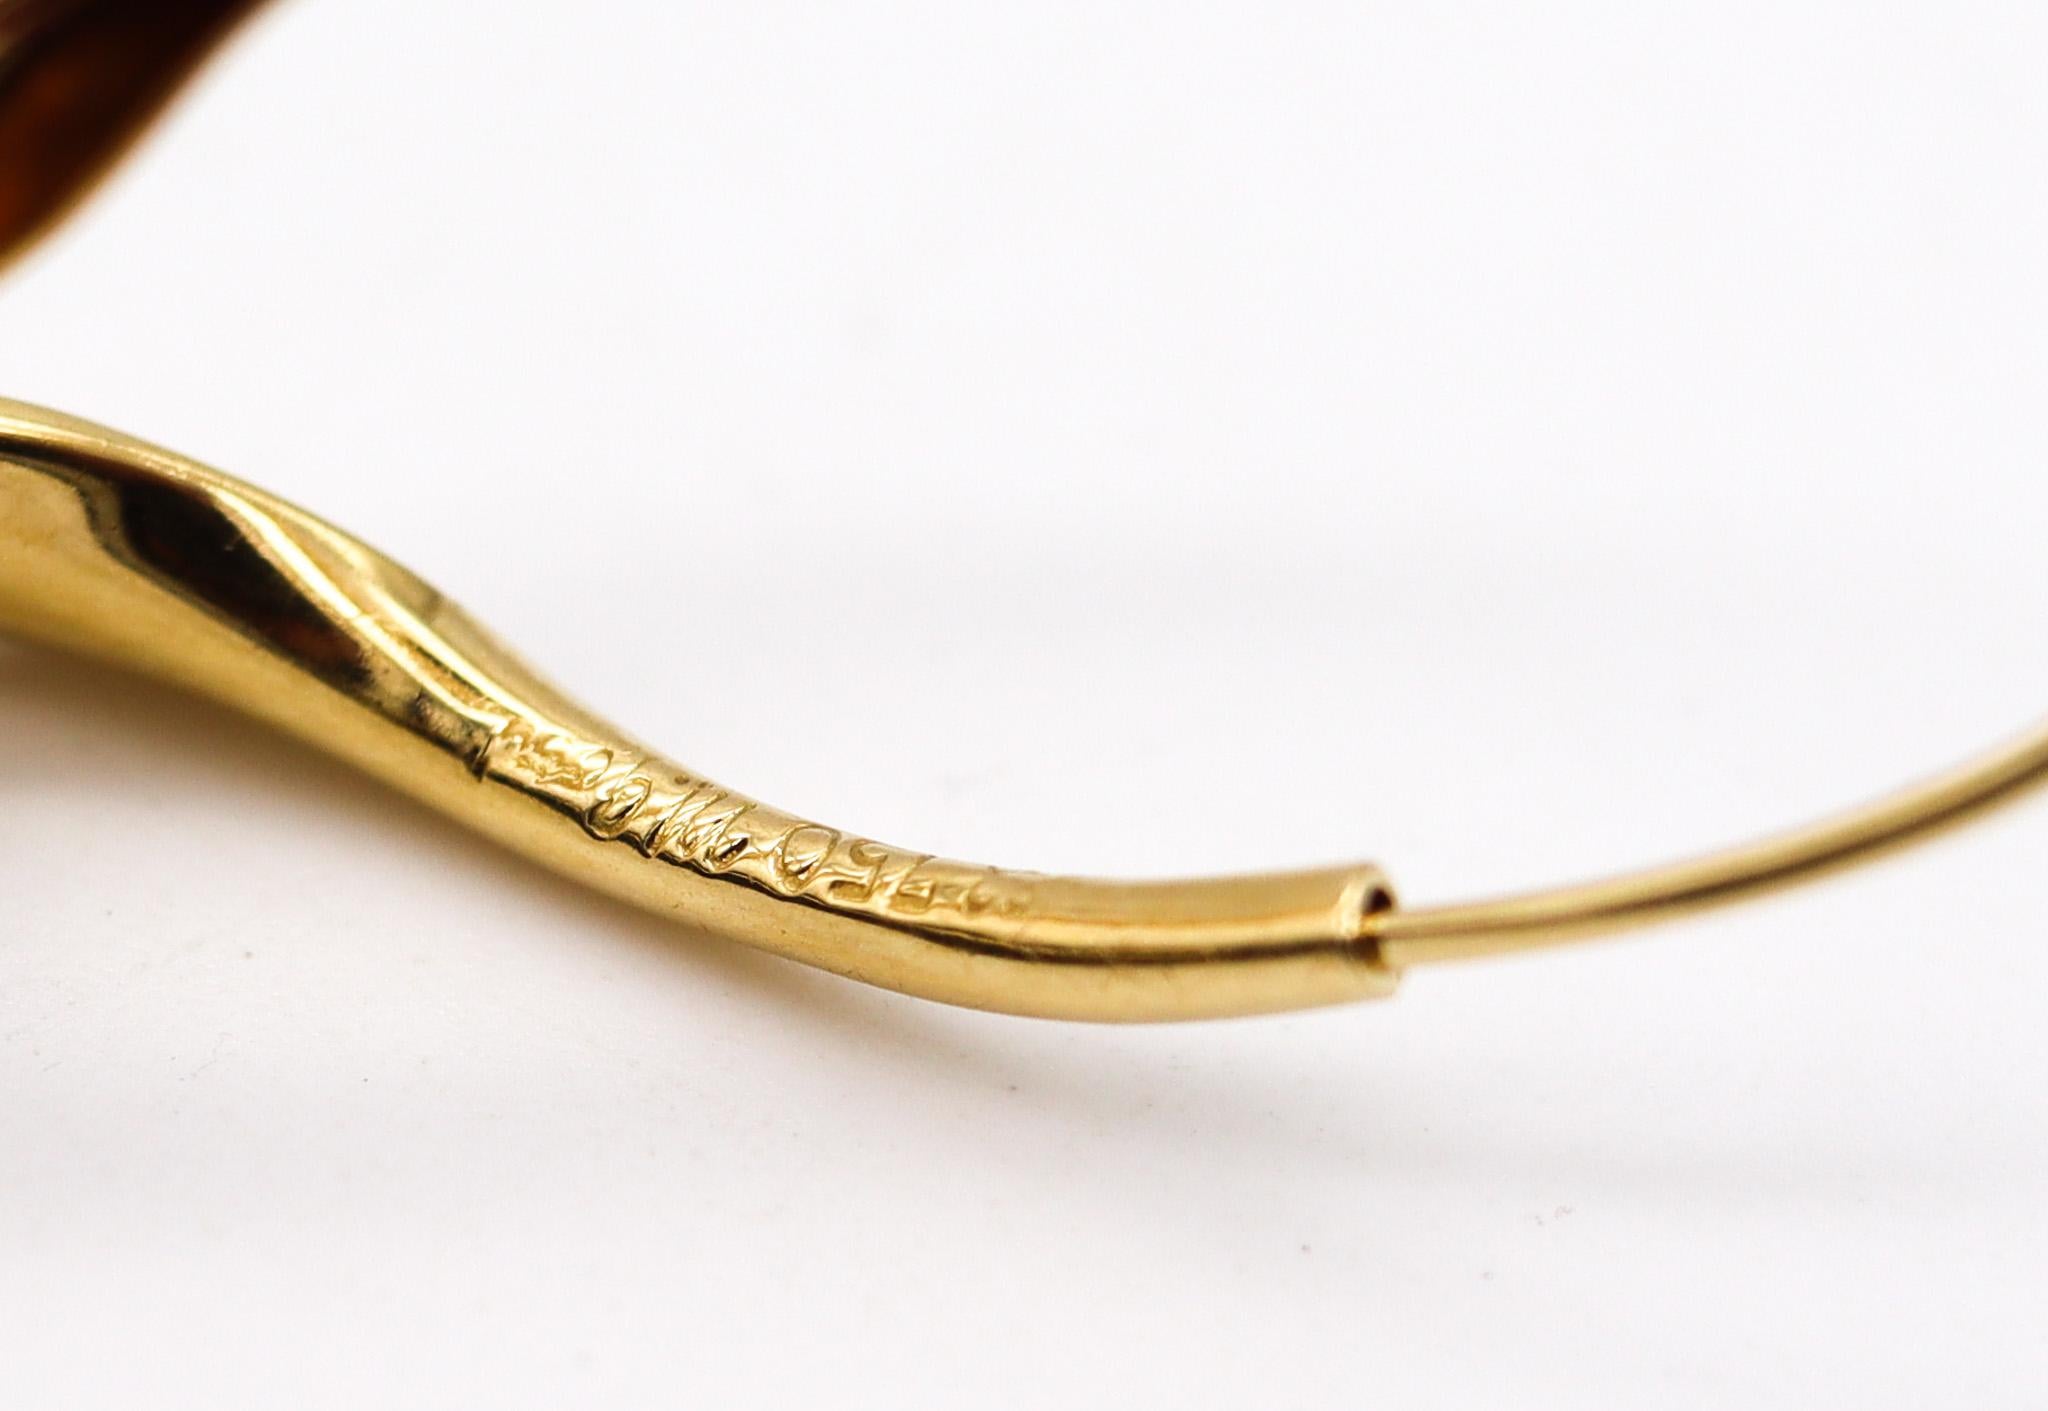 Brilliant Cut Michael Good Aerodynamic Drop Earrings in 18kt Gold with 4.08ctw in Diamonds